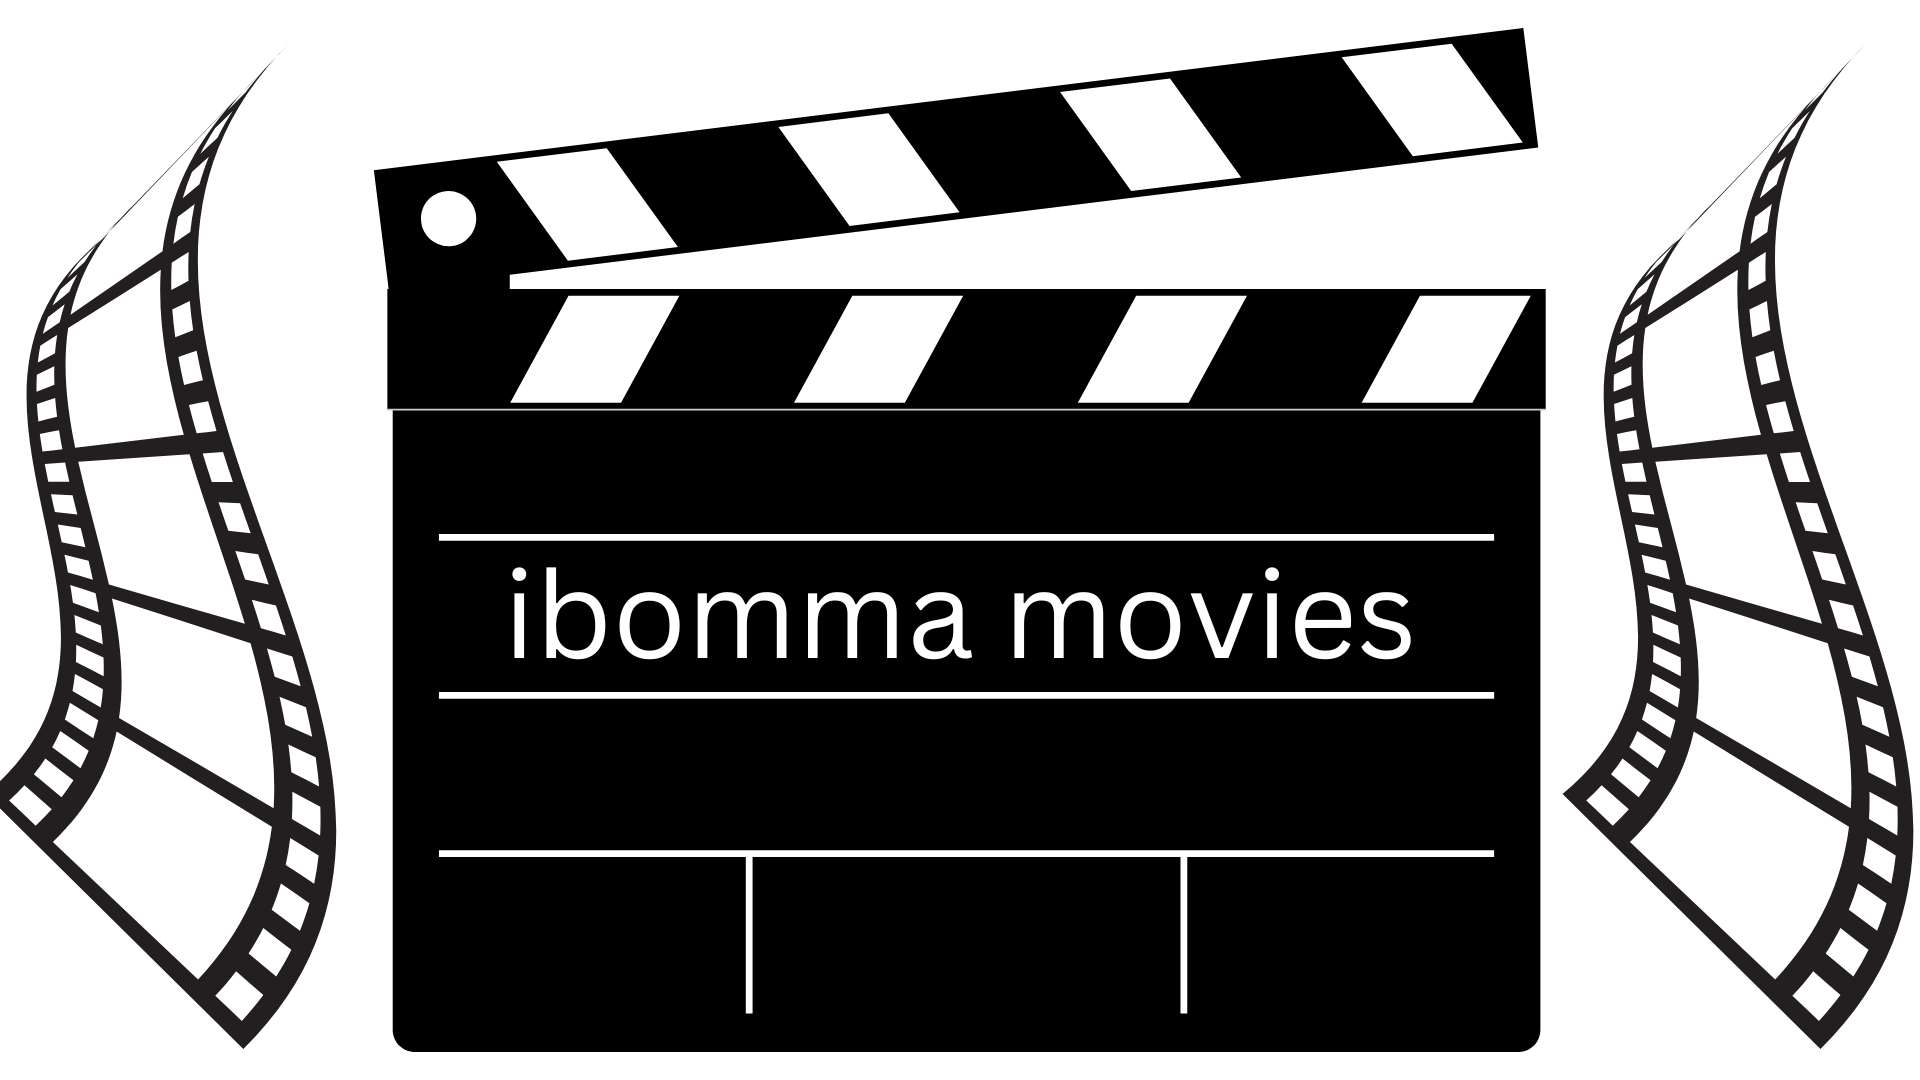 ibomma movies in telugu